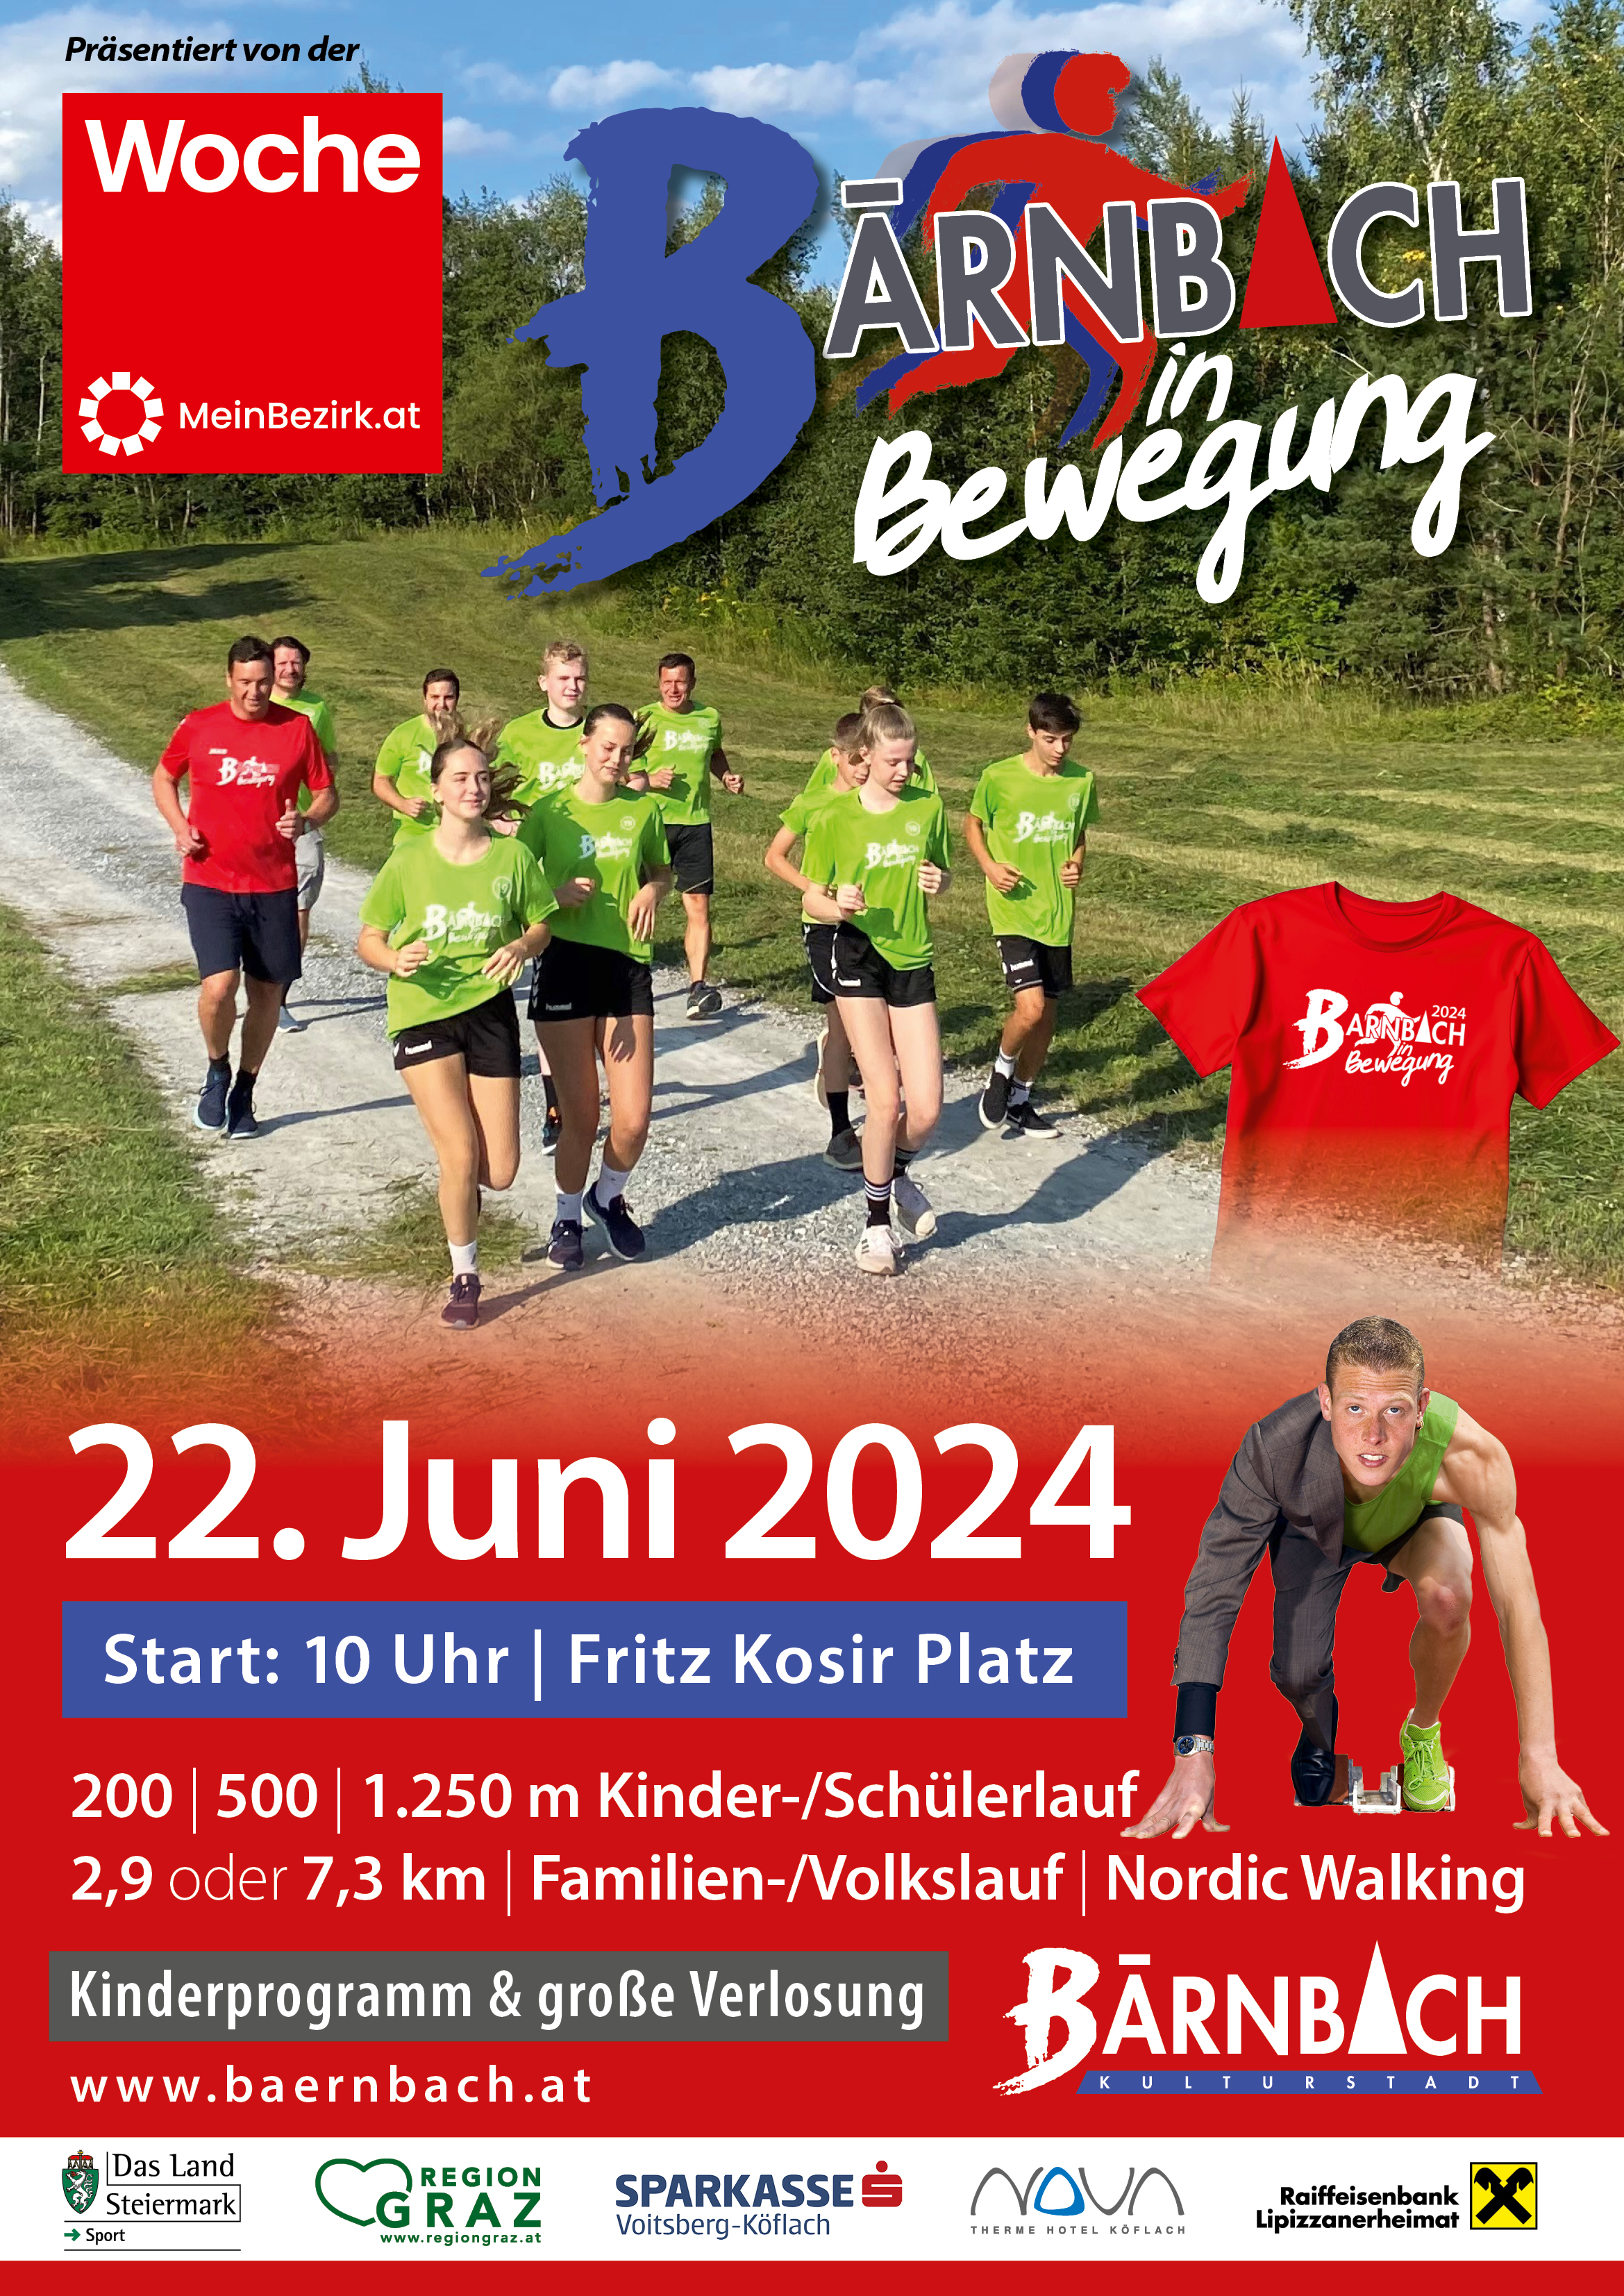 plakat bärnbach in bewegung 2024.jpg